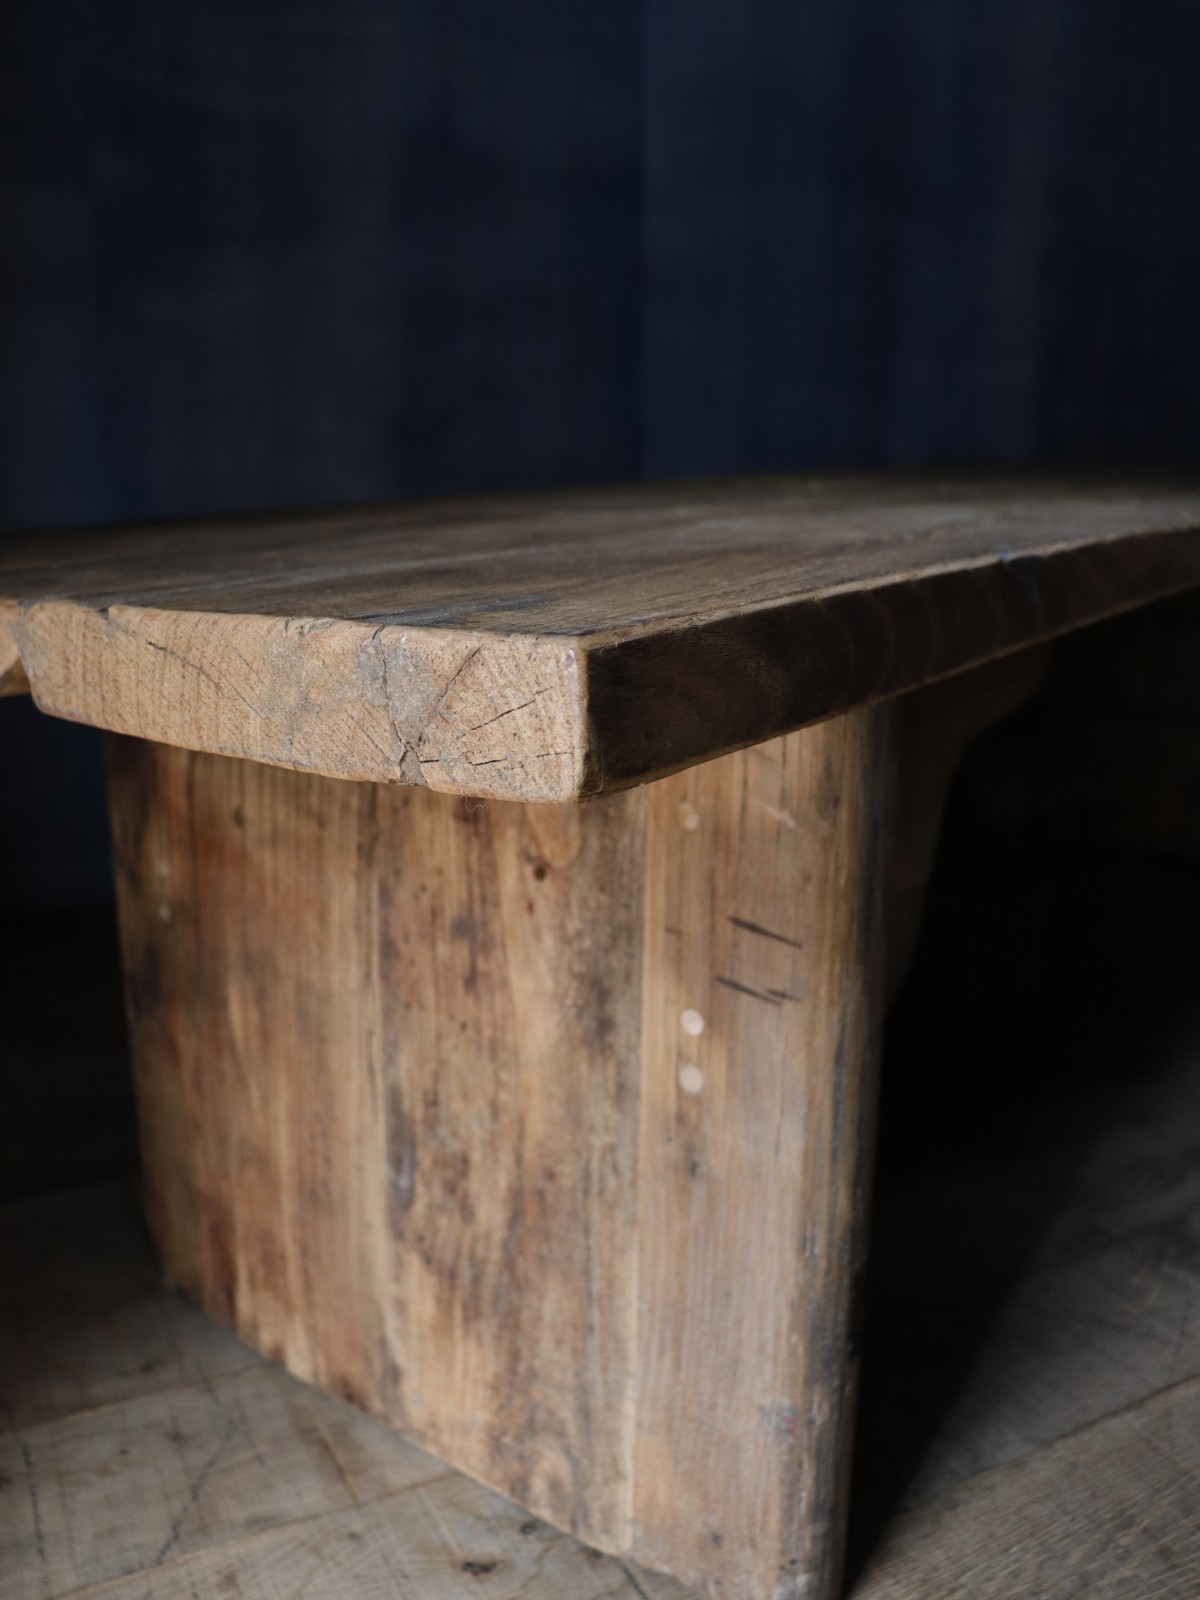 elmwood, table, bench, indonesian furniture